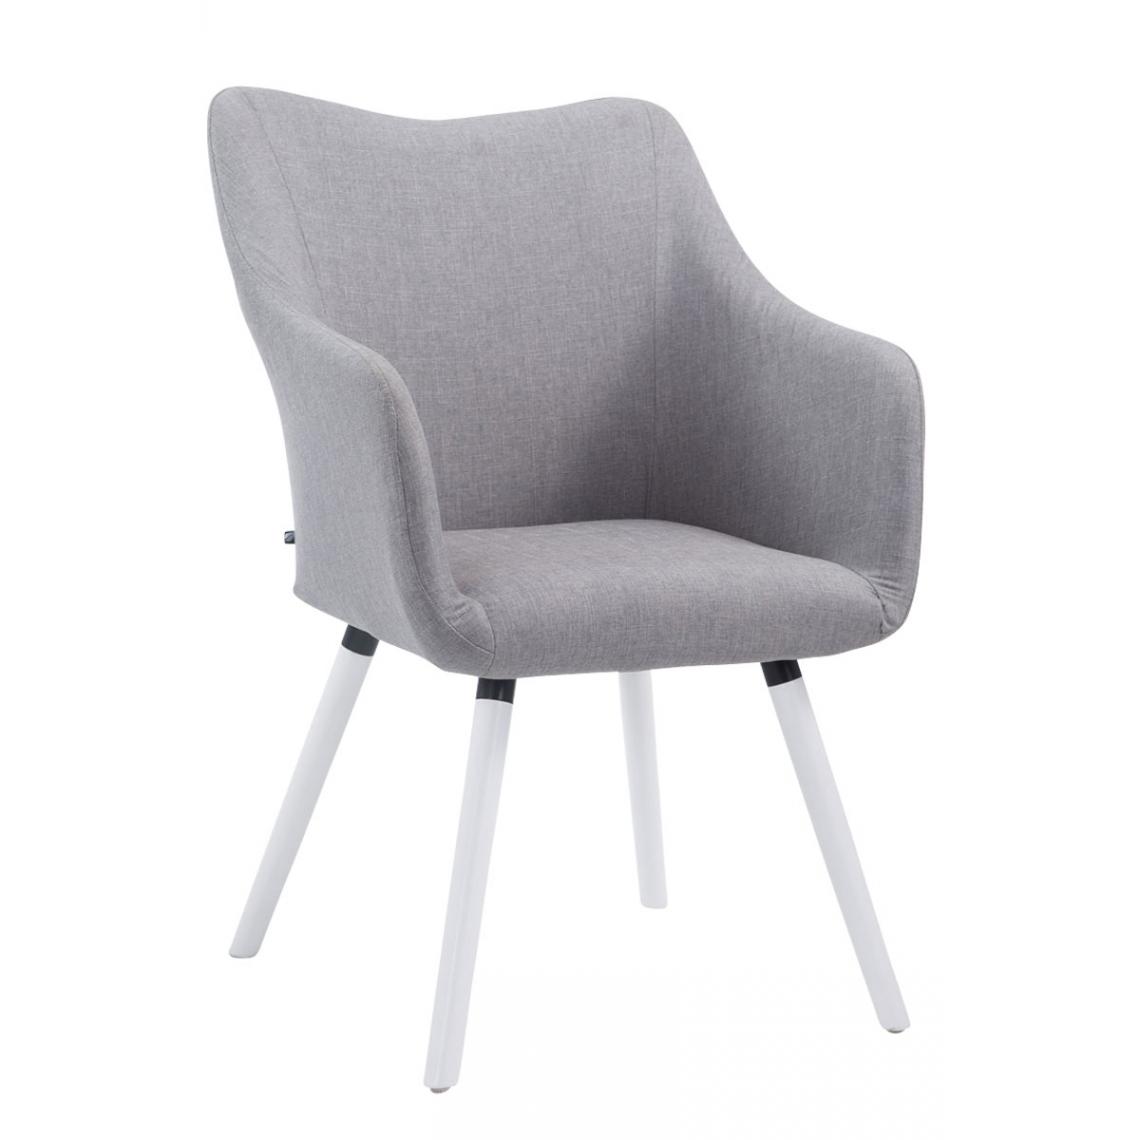 Icaverne - Moderne Chaise visiteur categorie Bamako V2 tissu blanc couleur gris - Chaises